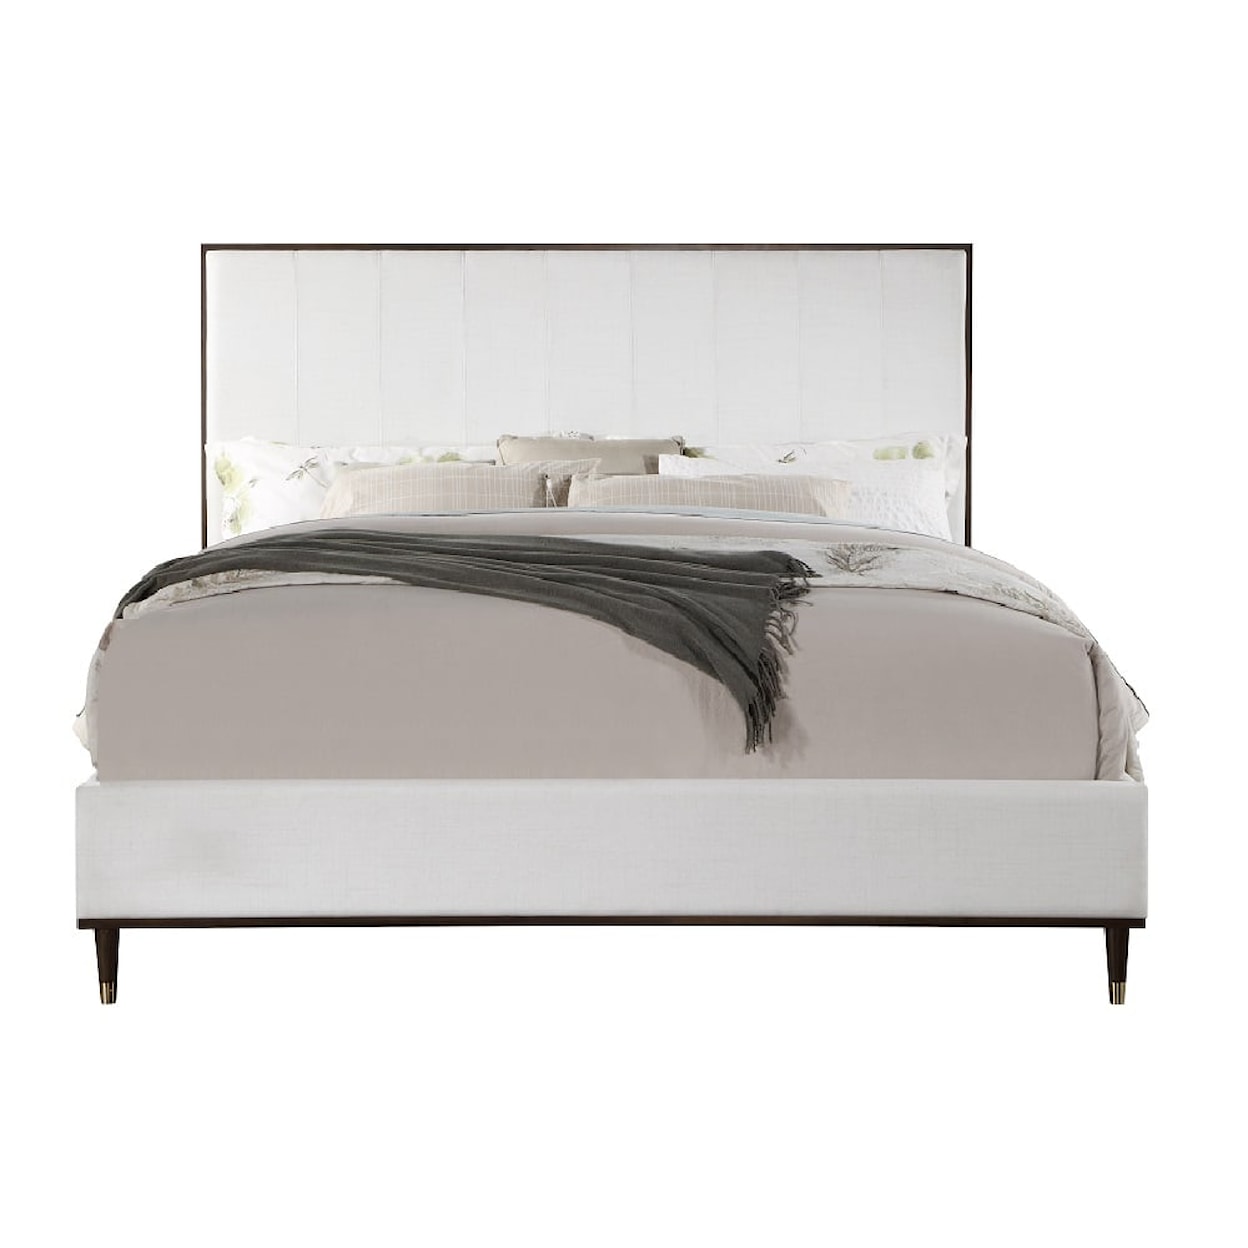 Acme Furniture Carena Queen Bed